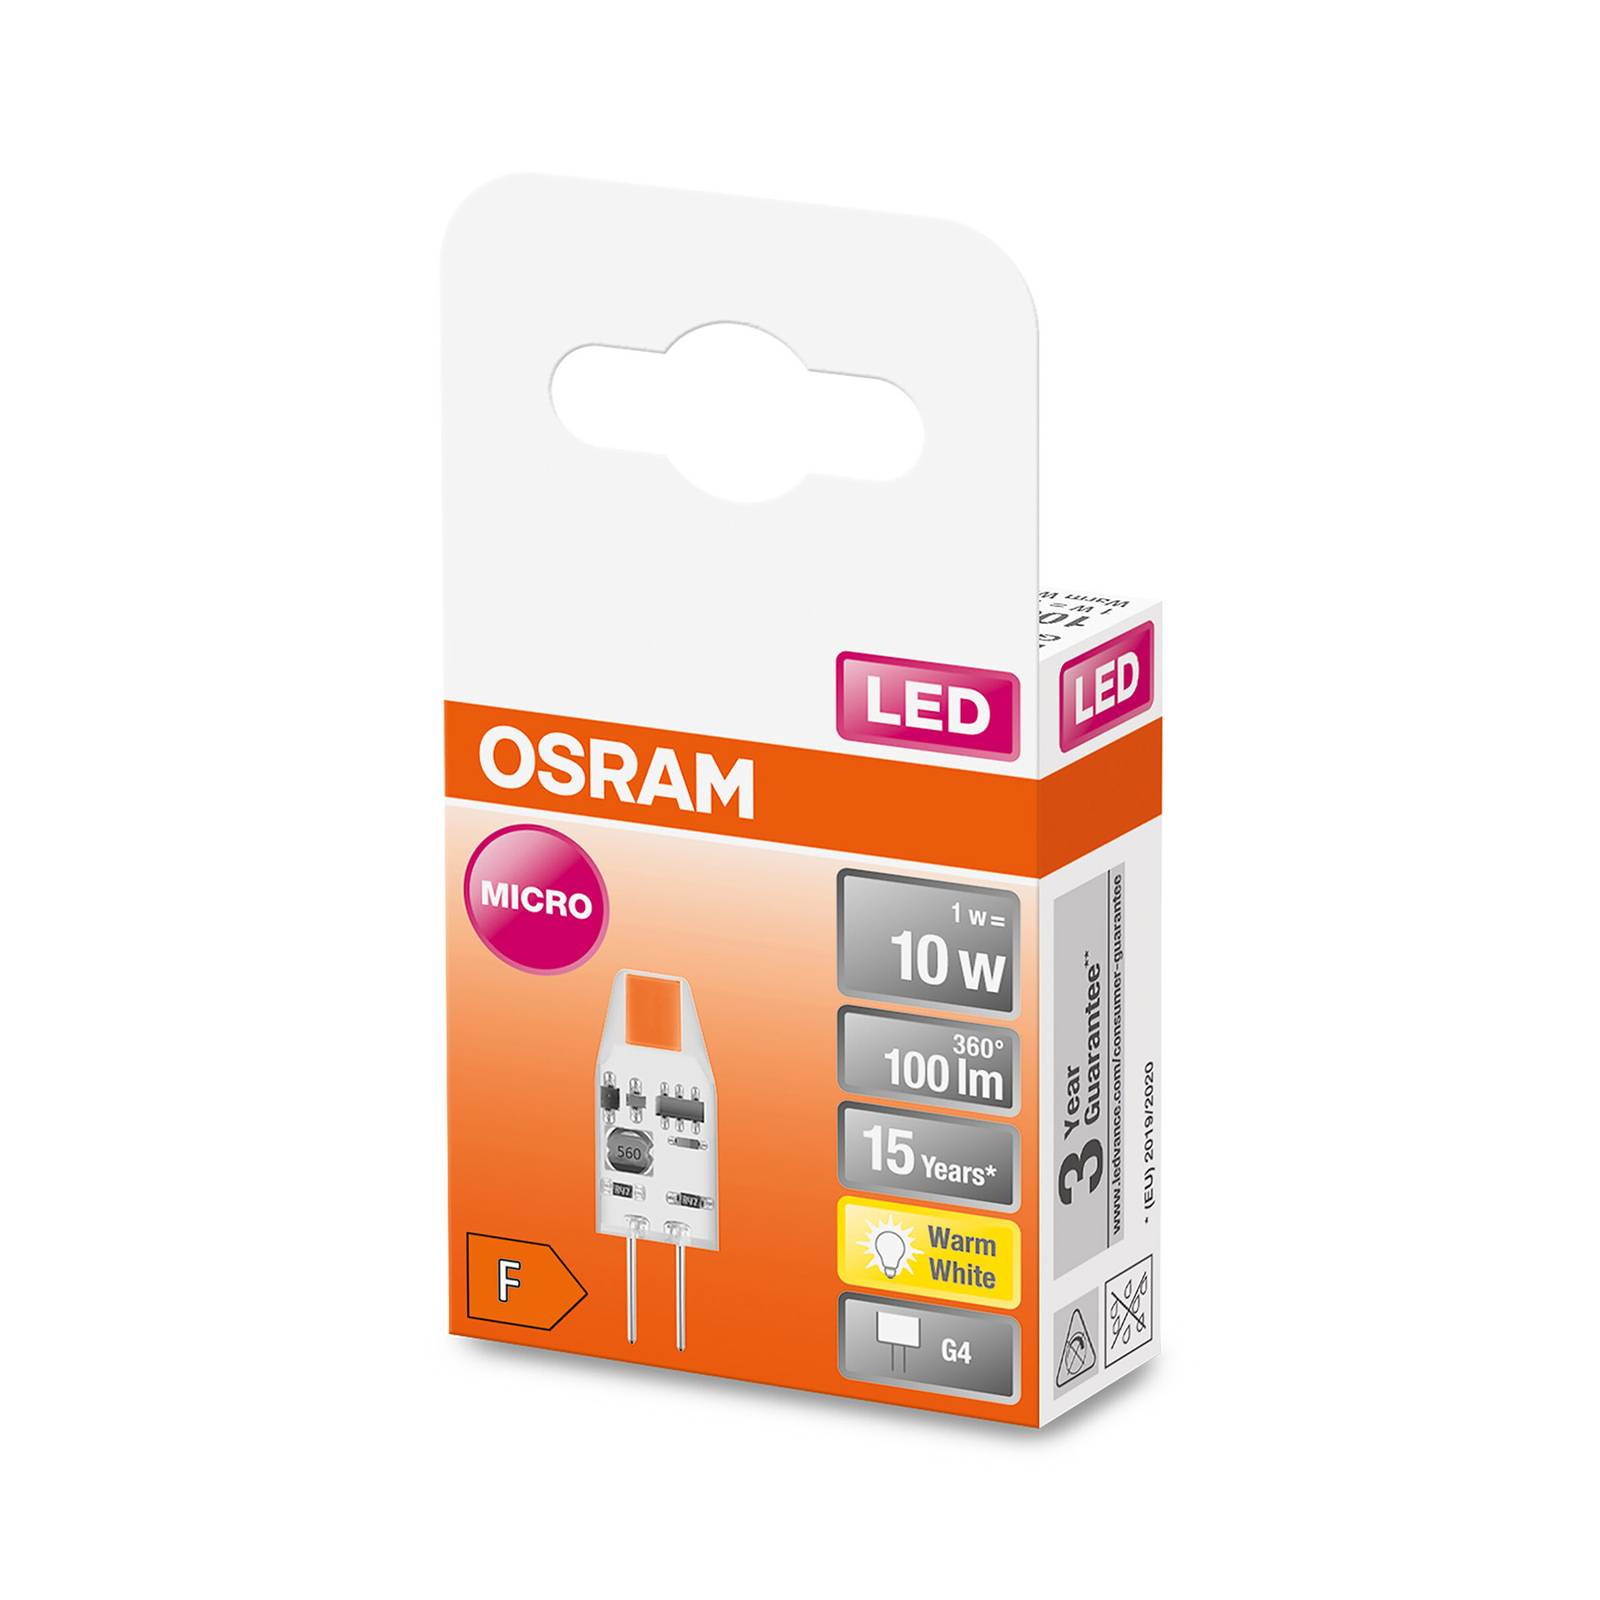 OSRAM OSRAM PIN Micro LED žárovka G4 1W 100lm 2 700K